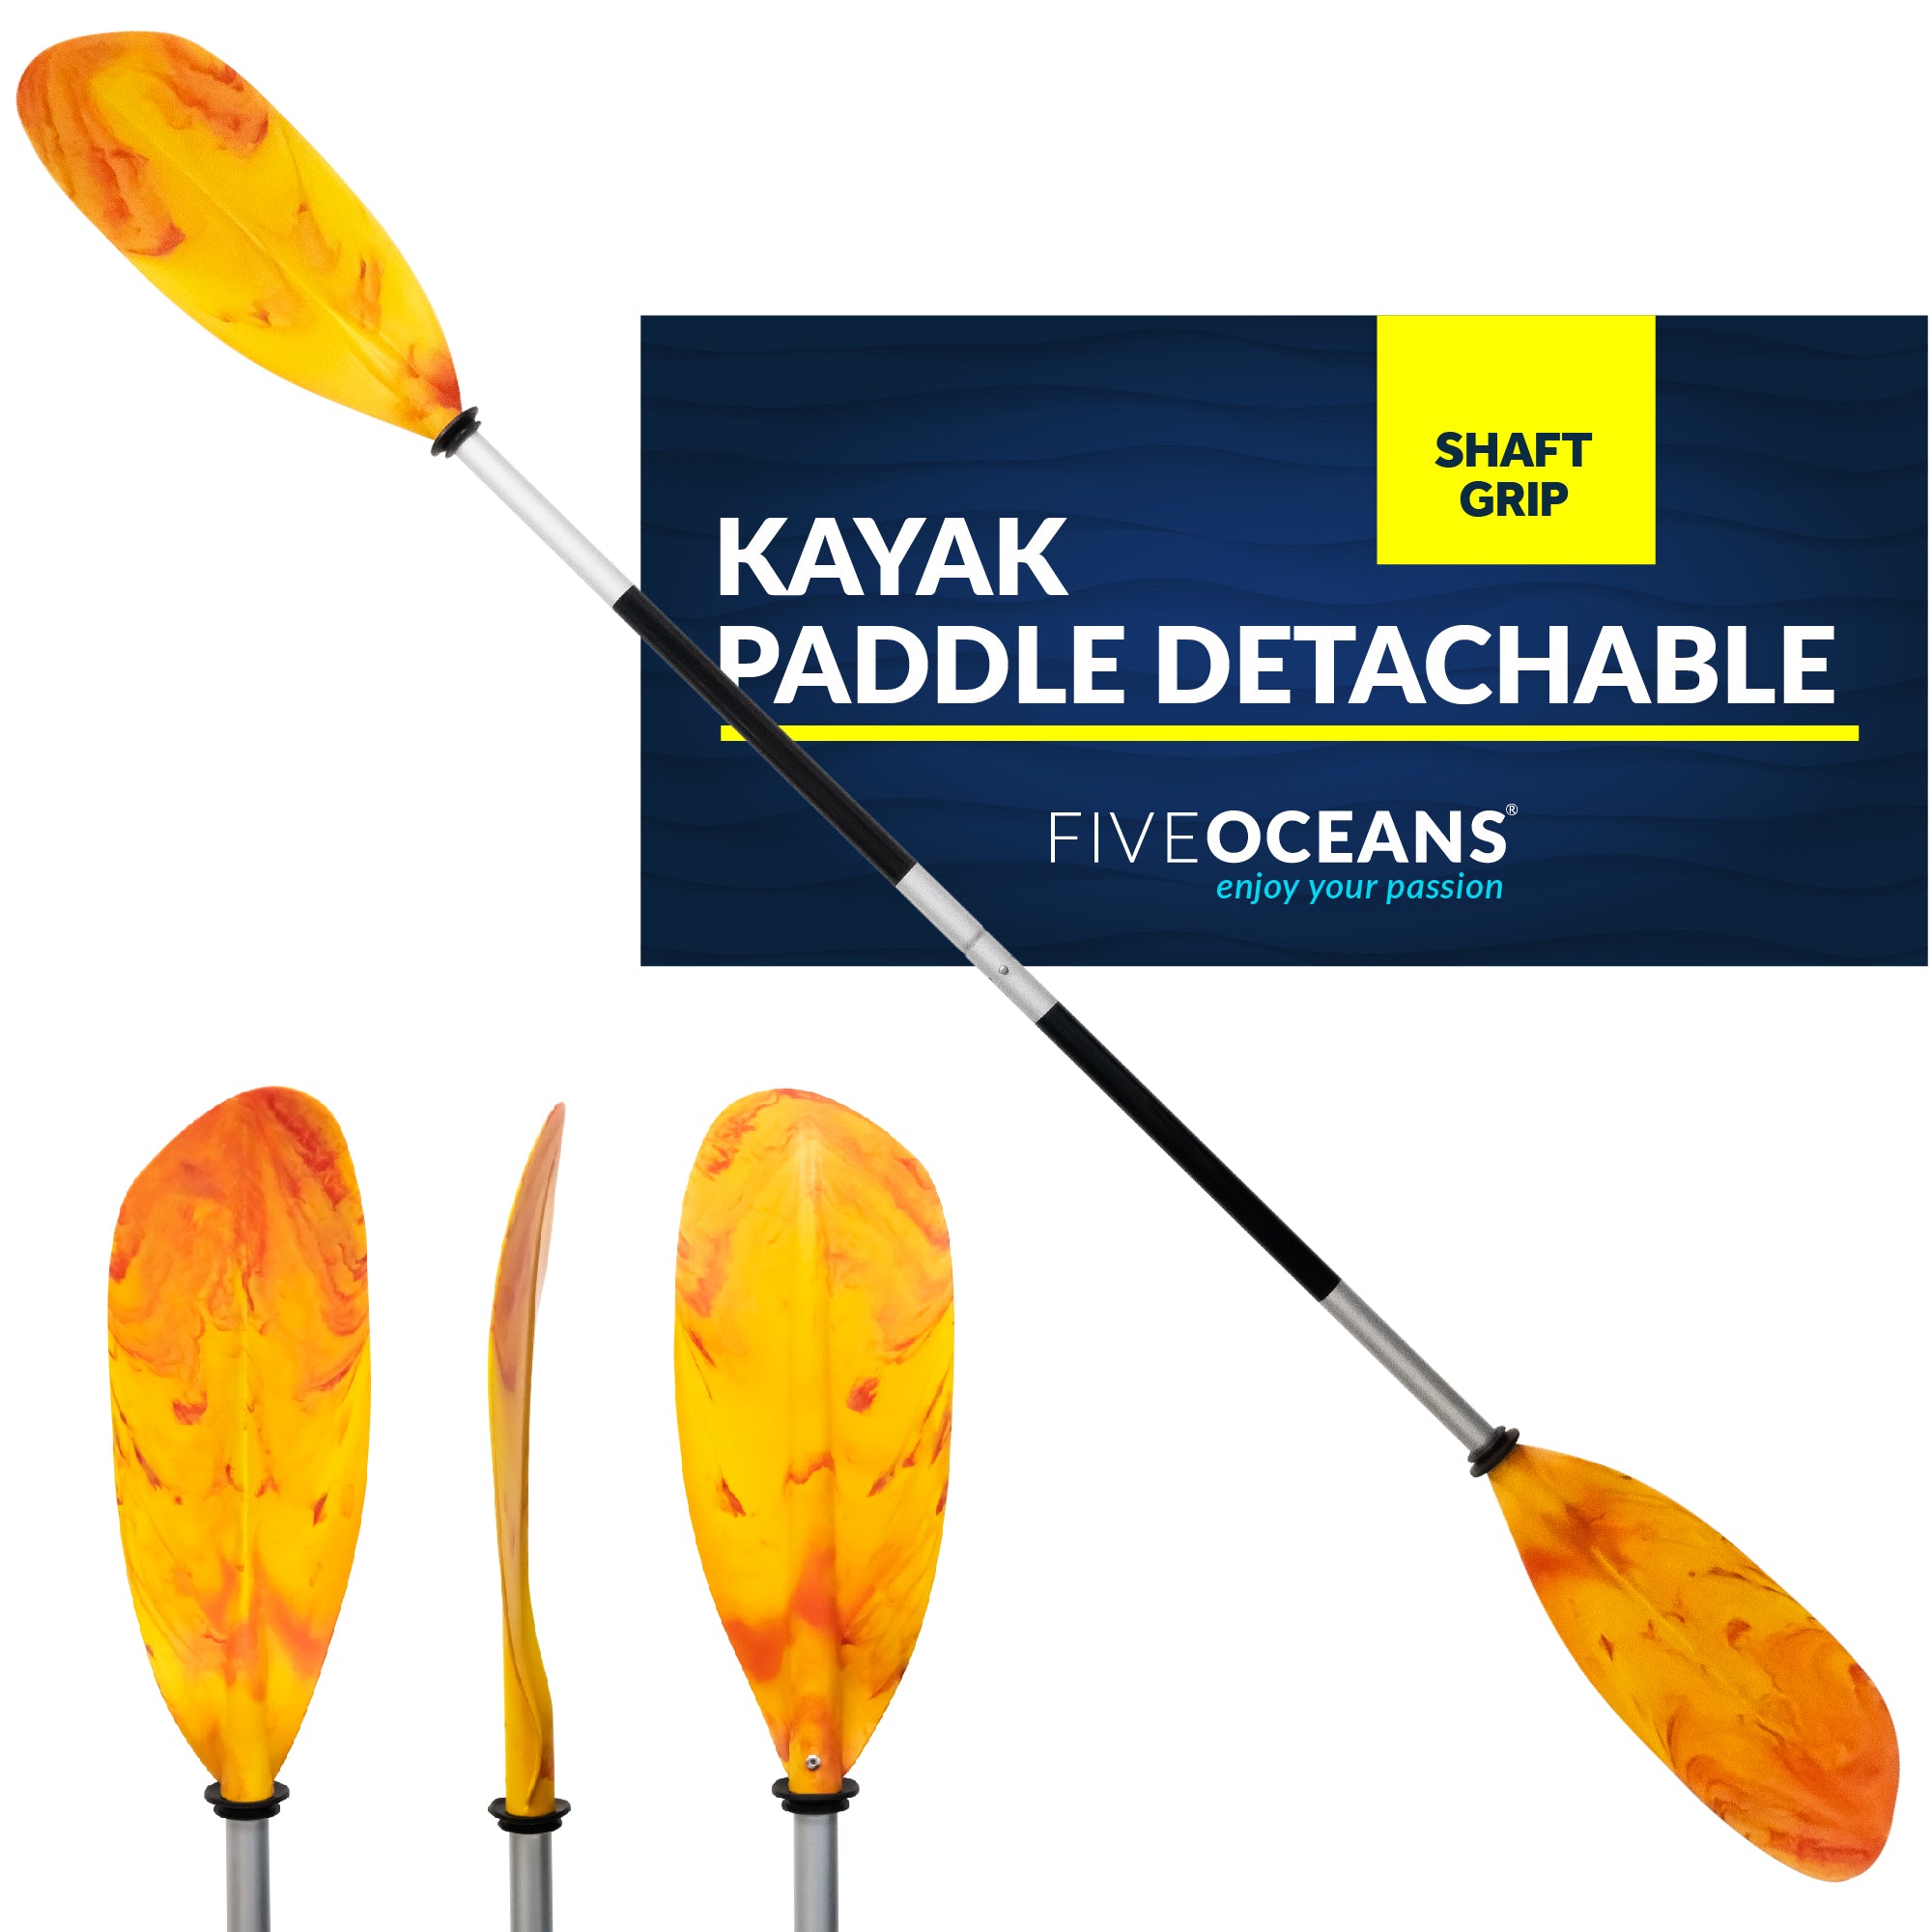 Kayak Paddle, Detachable 84" - FO2880